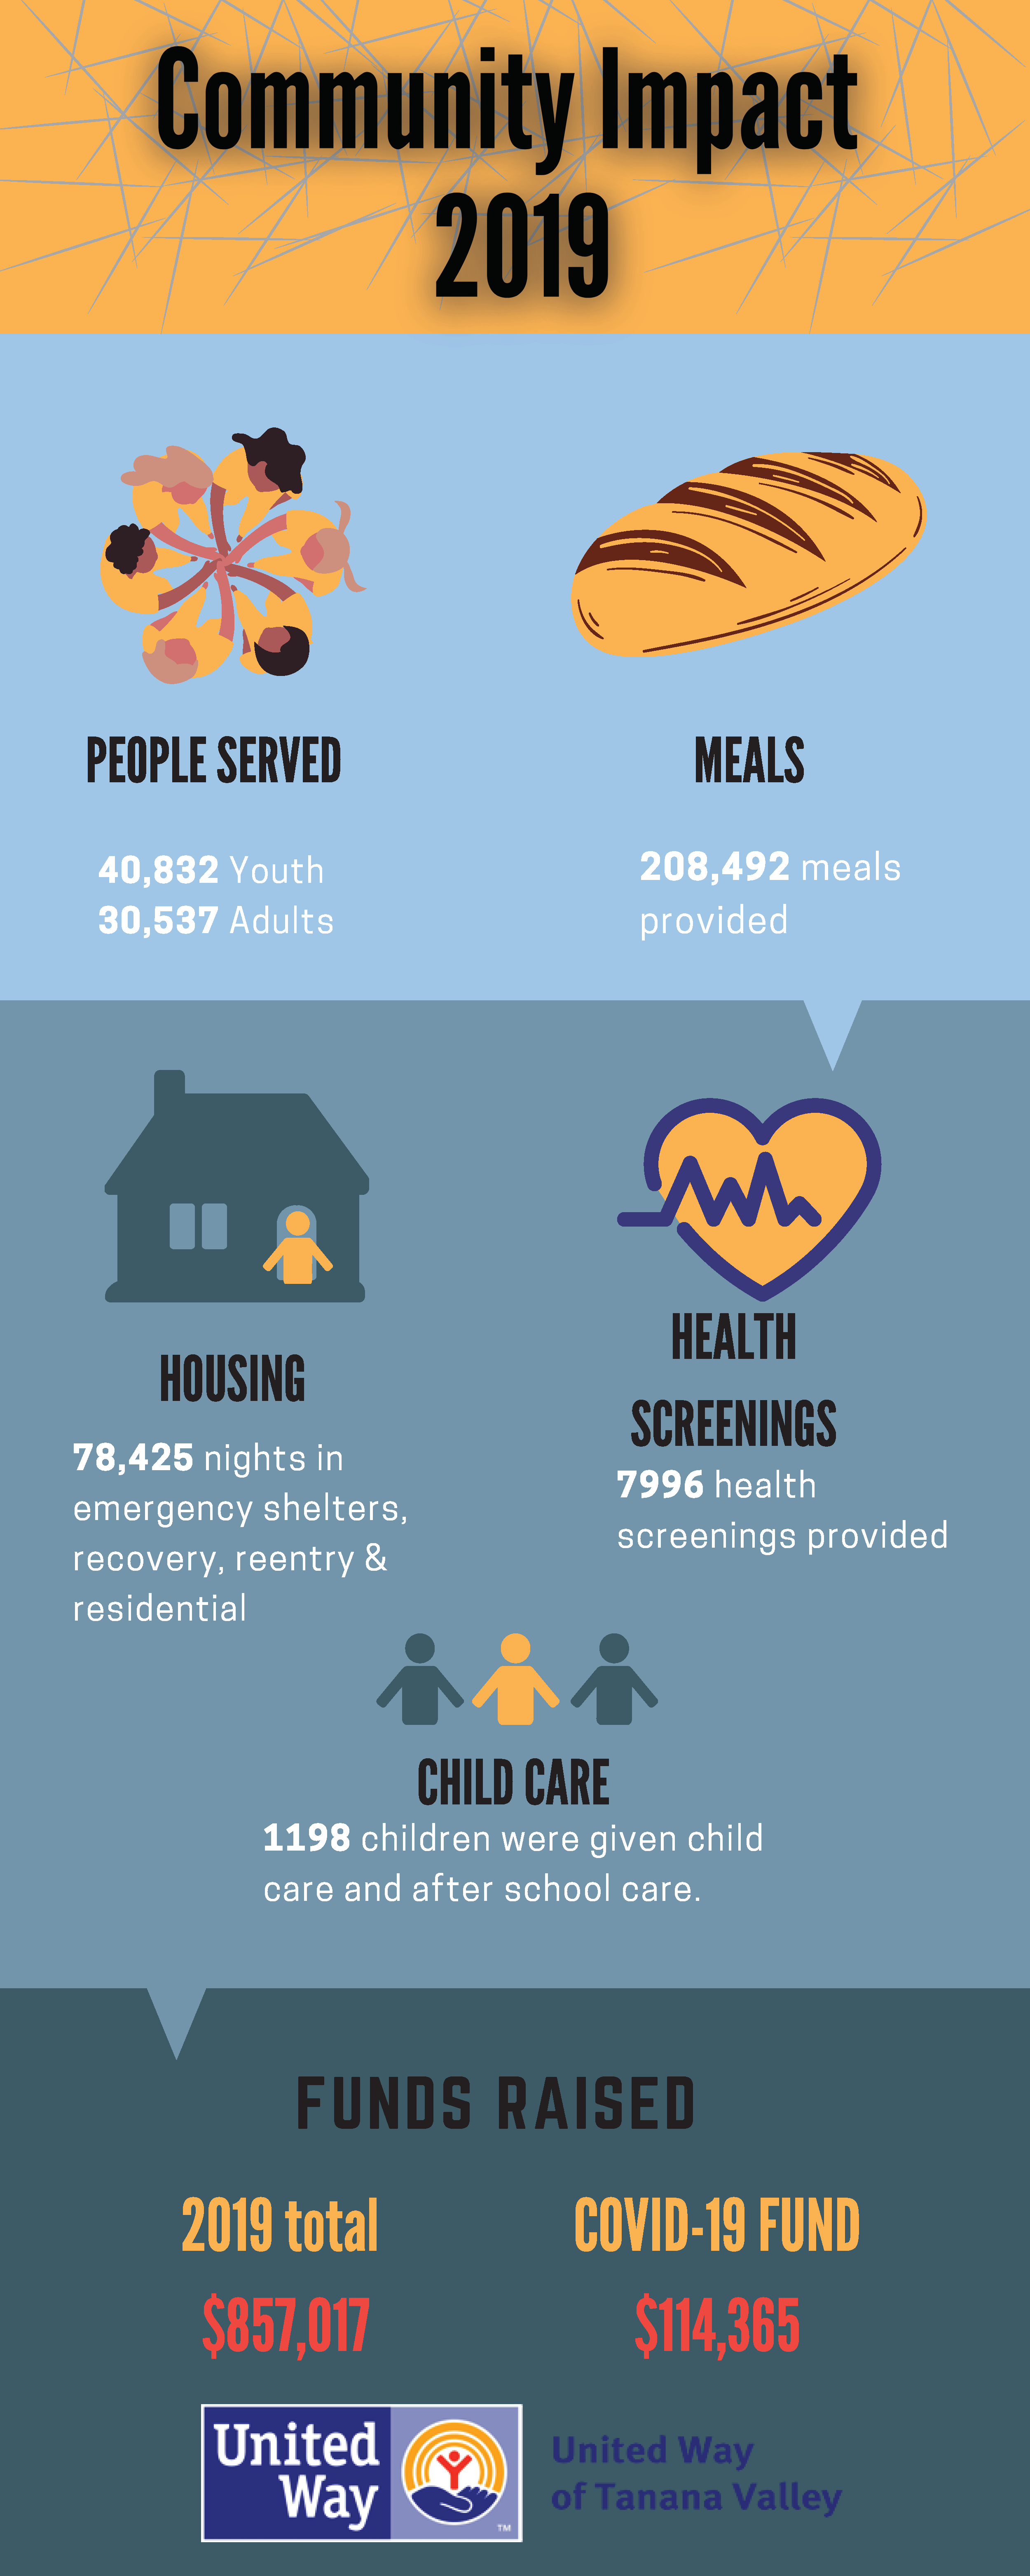 Community Impact 2019 infographic